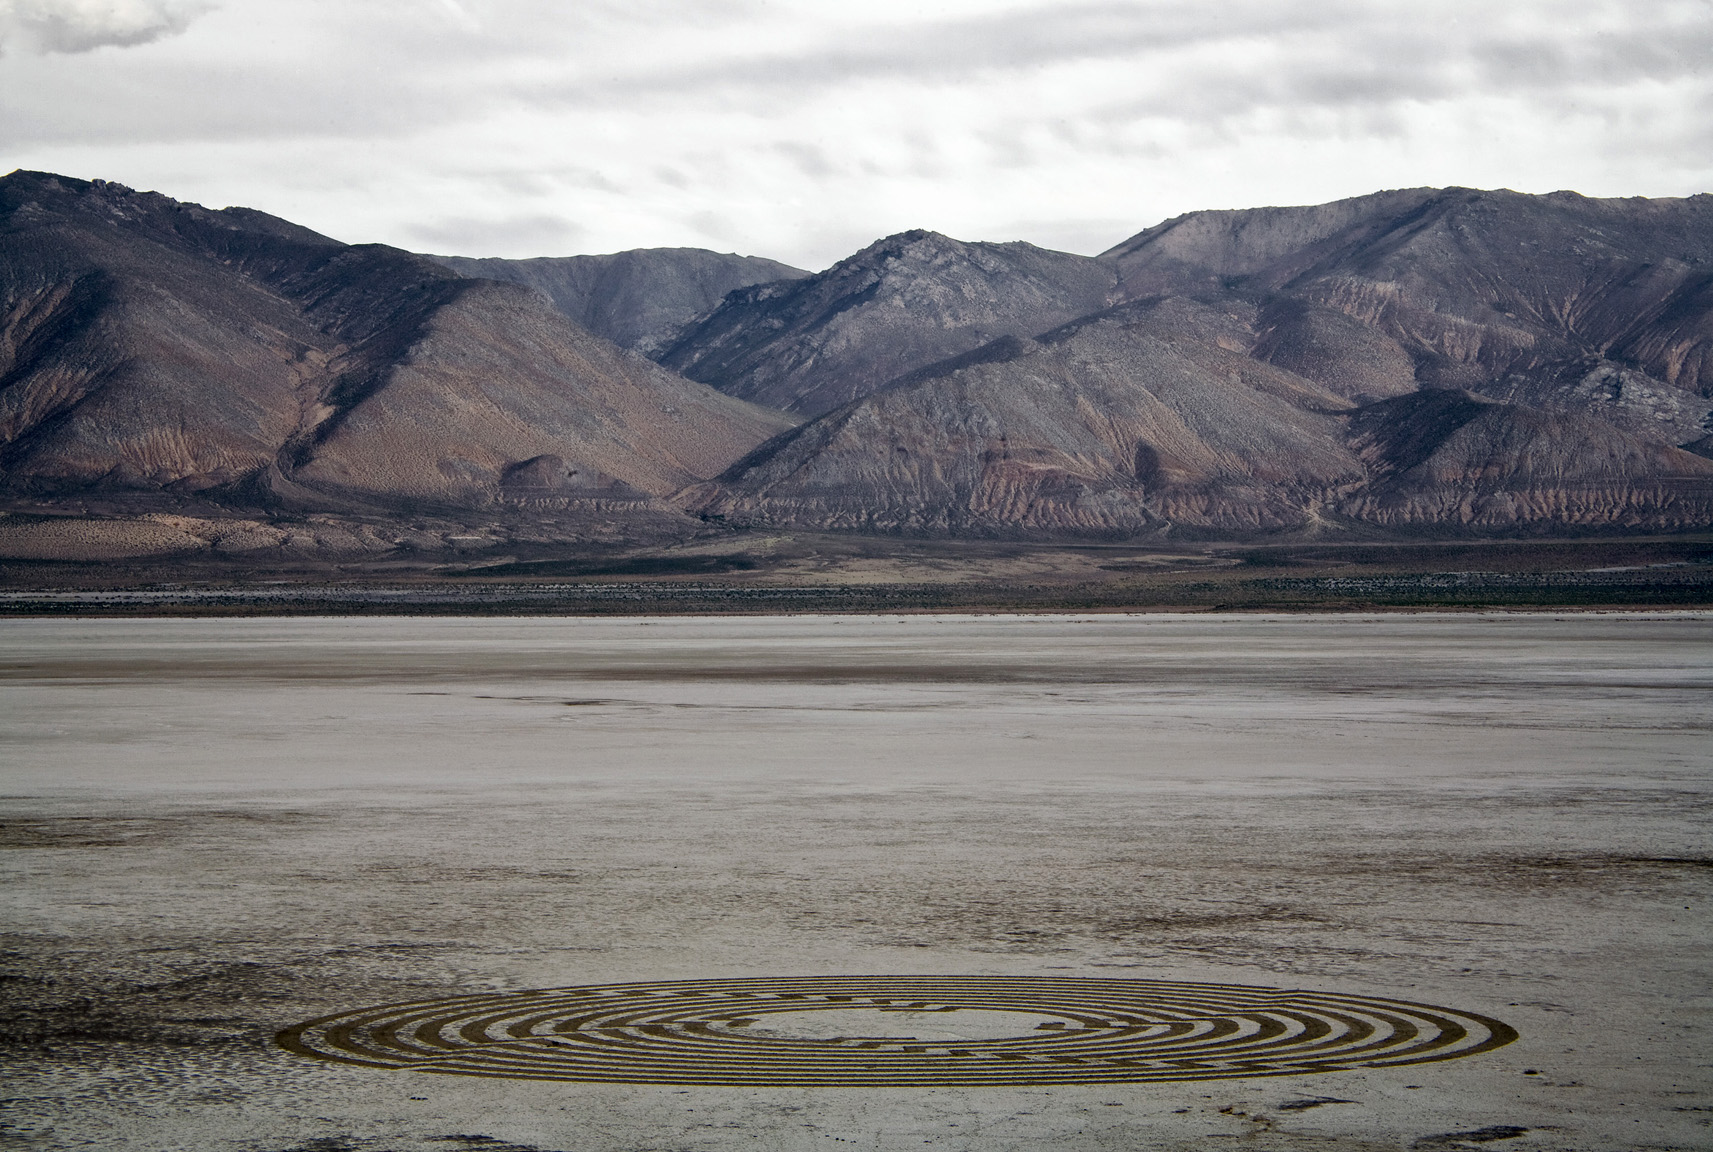 large scale circular pattern in arid landscape